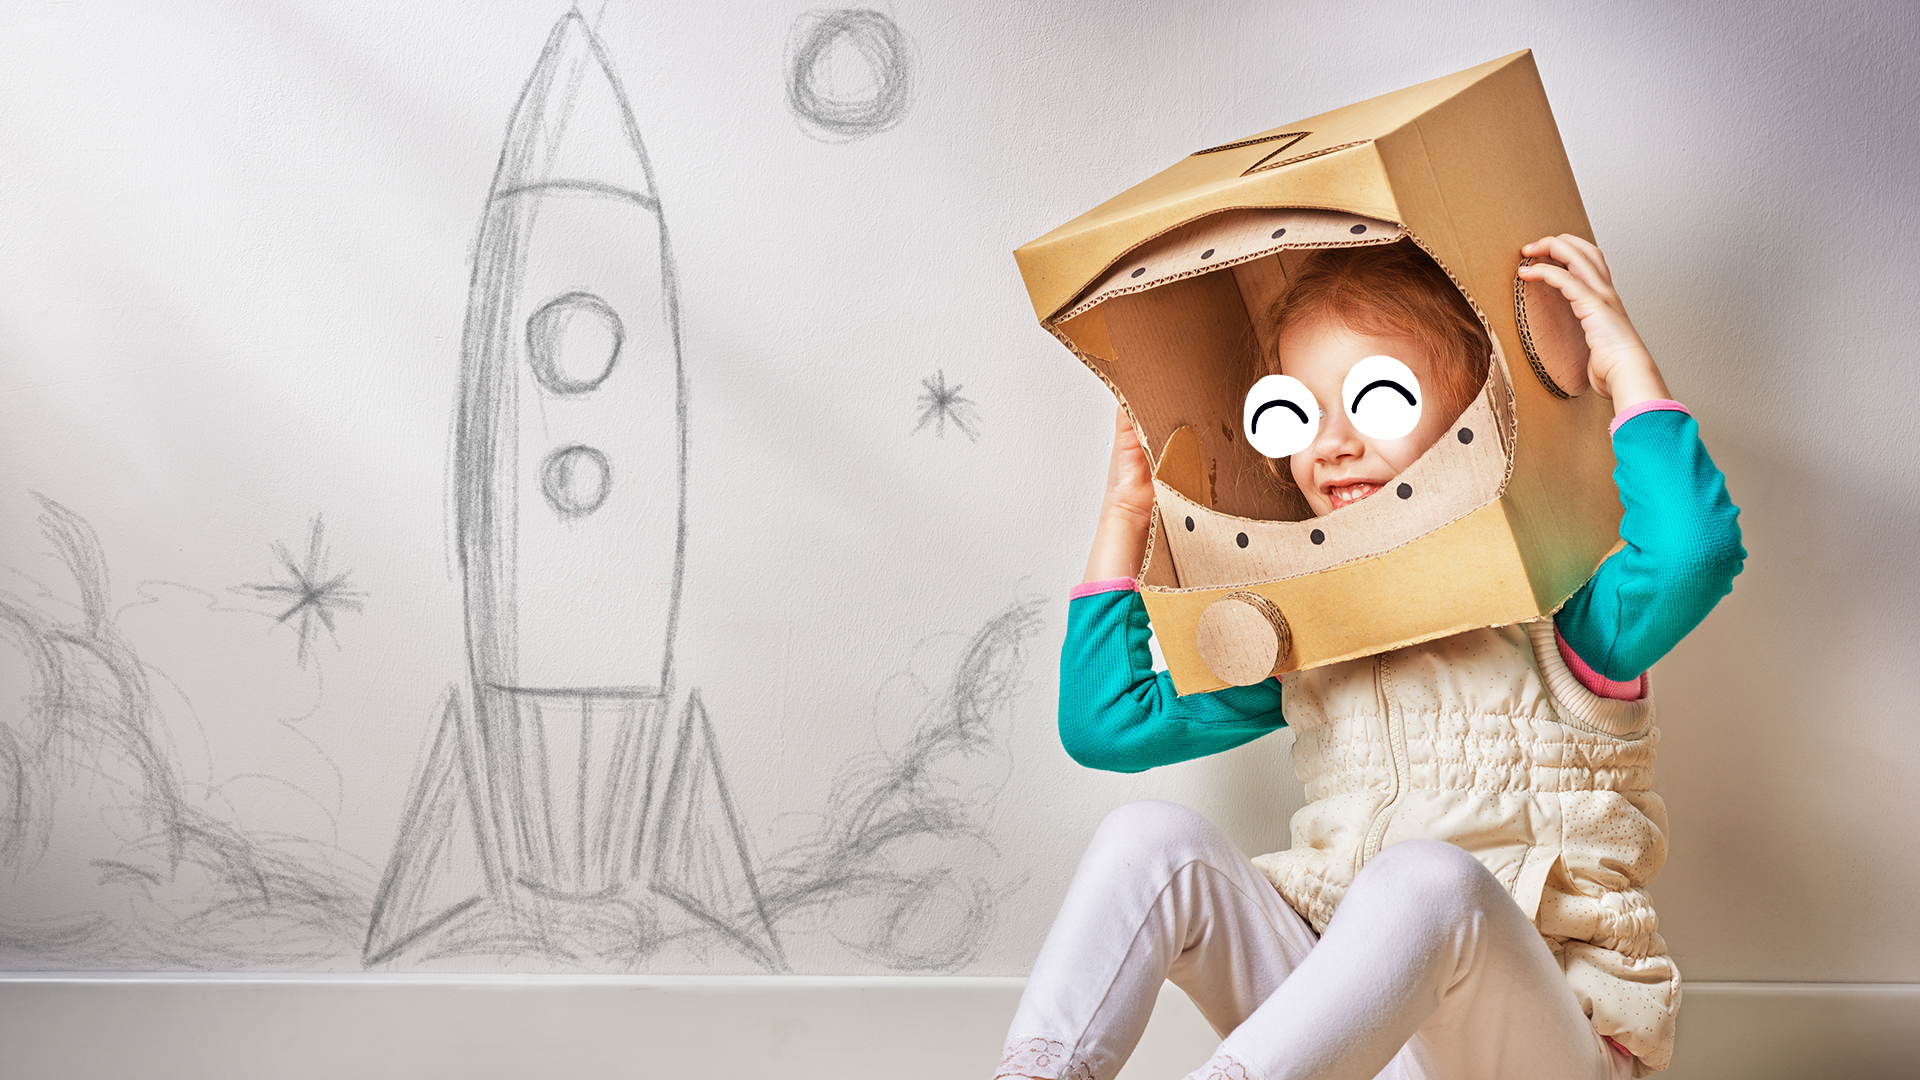 A child using a cardboard box as an astronaut helmet